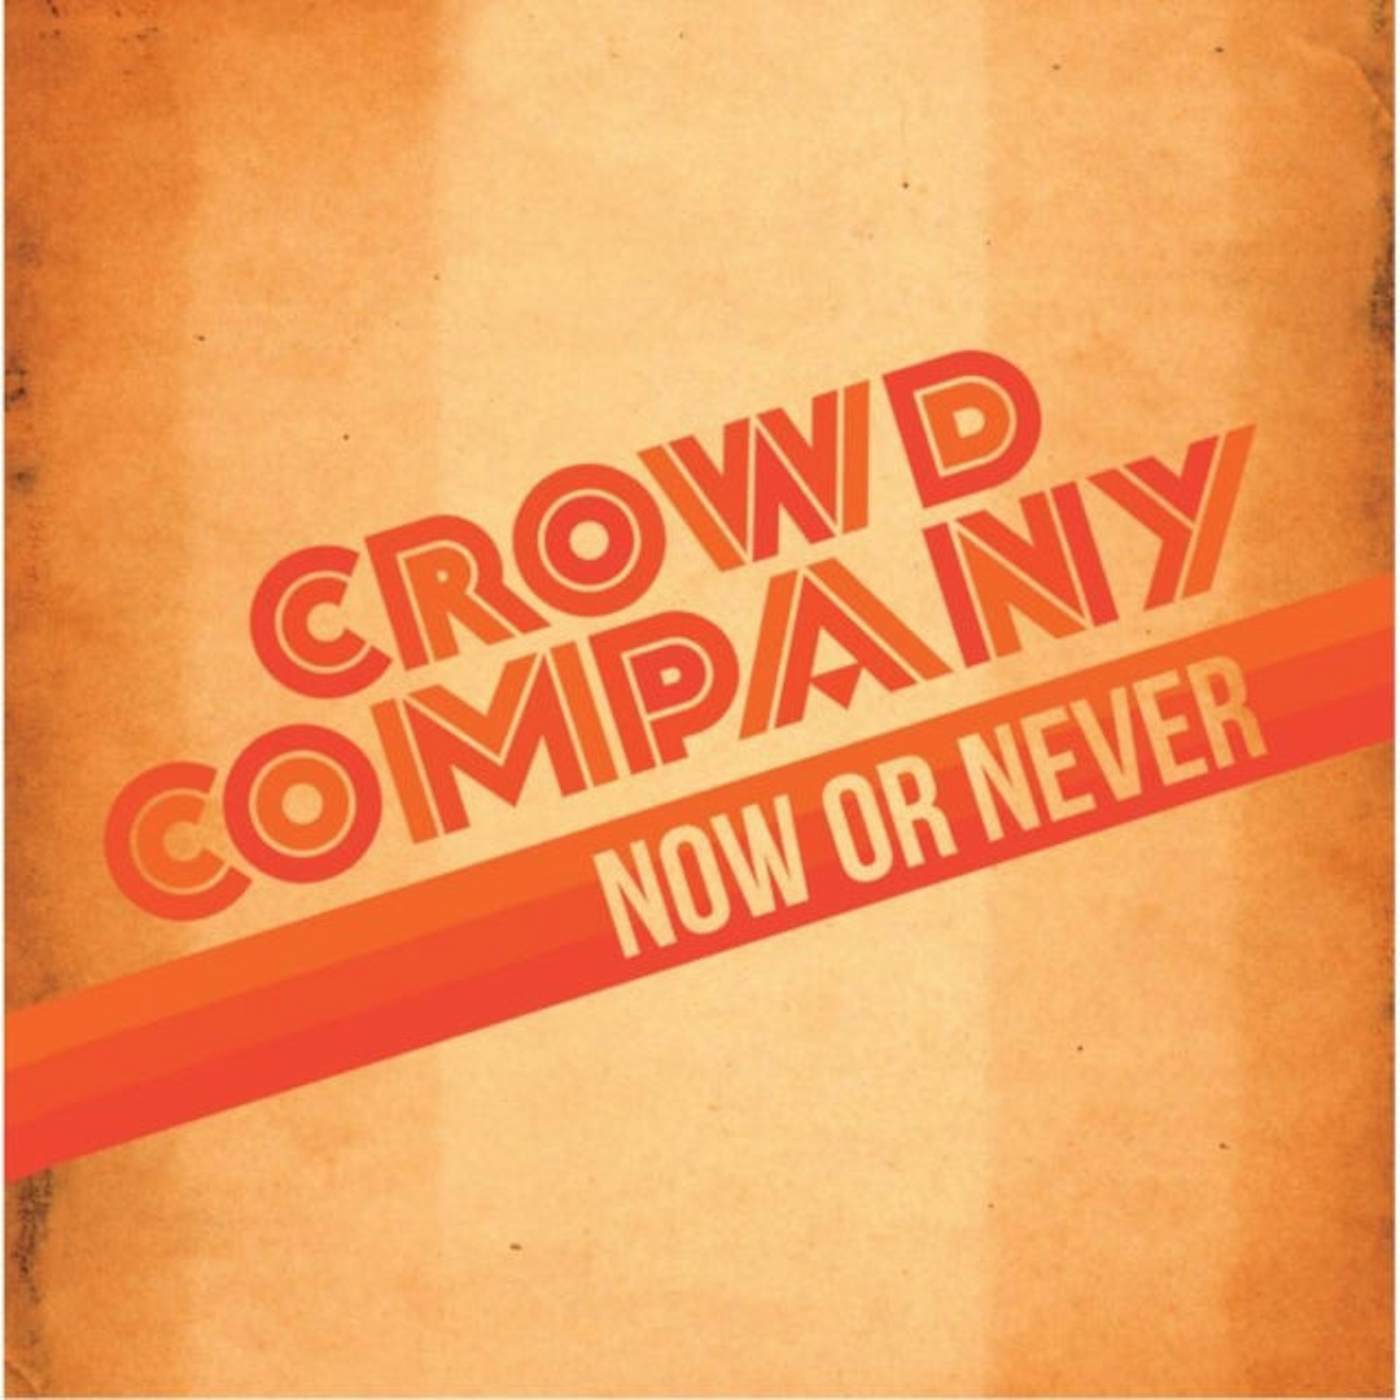 Crowd Company LP - Now Or Never (Vinyl)